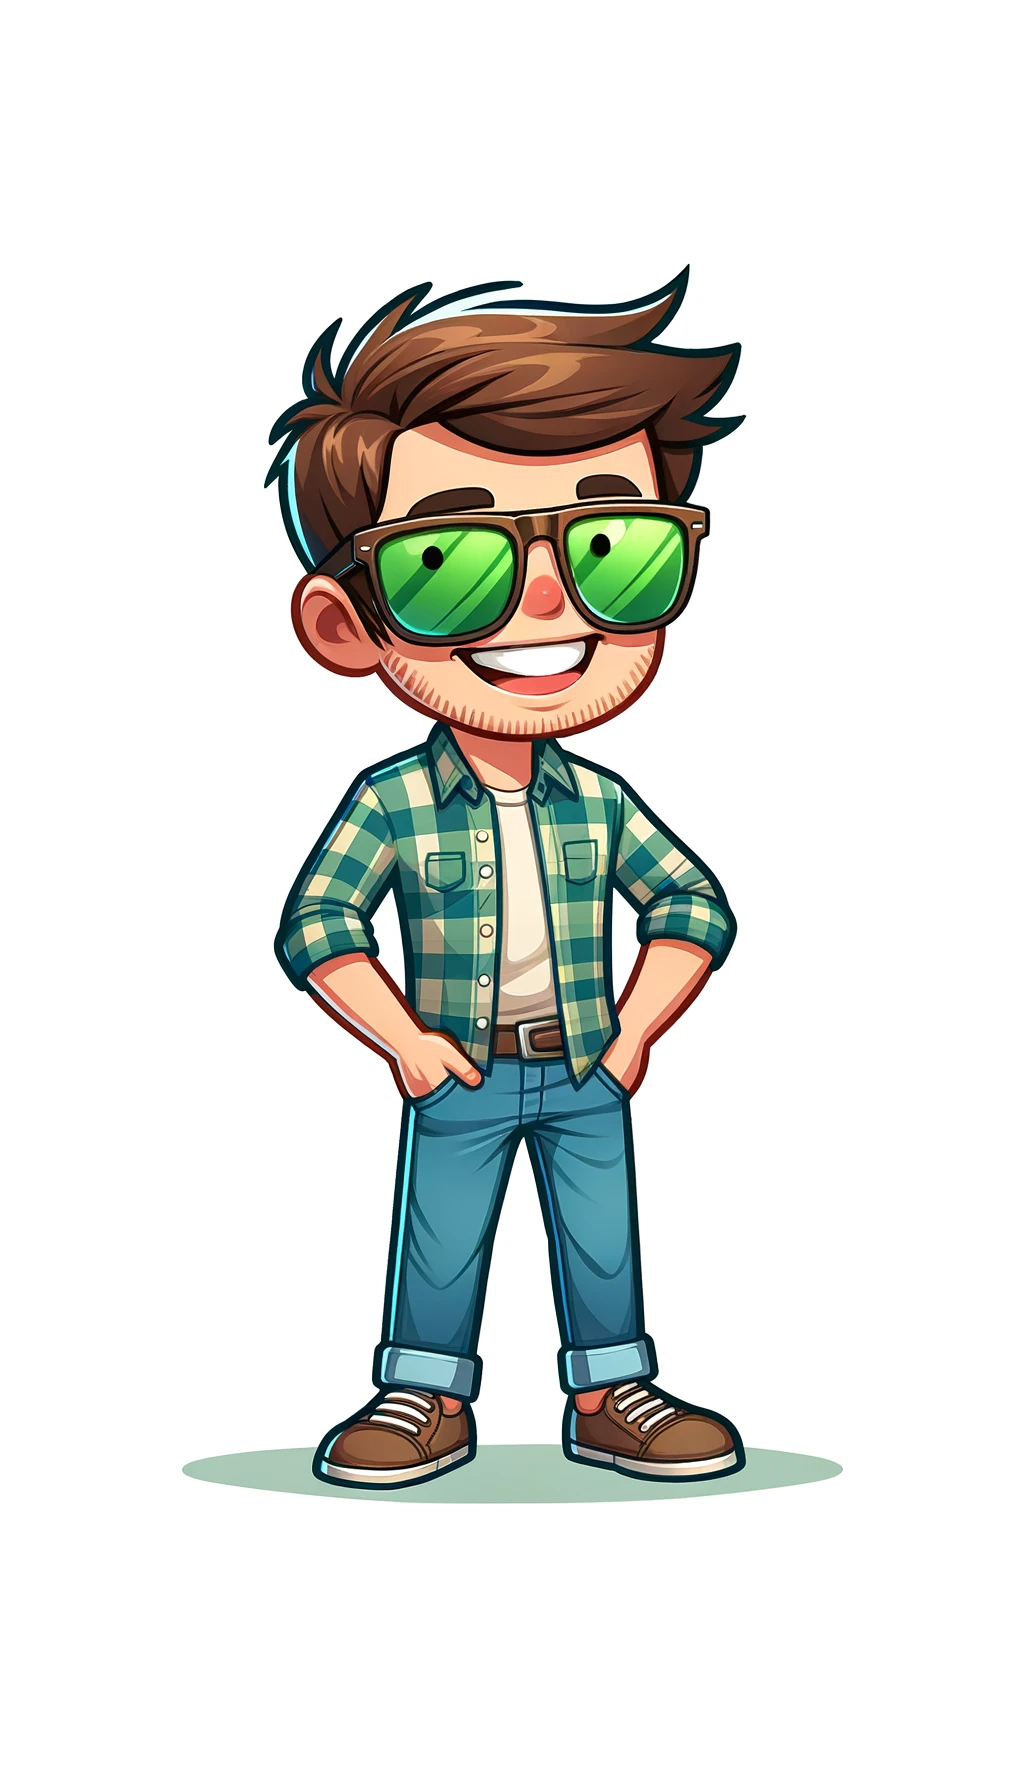 A cartoon character wearing sunglasses and a plaid shirt. Cartoon of Chritt, author pic